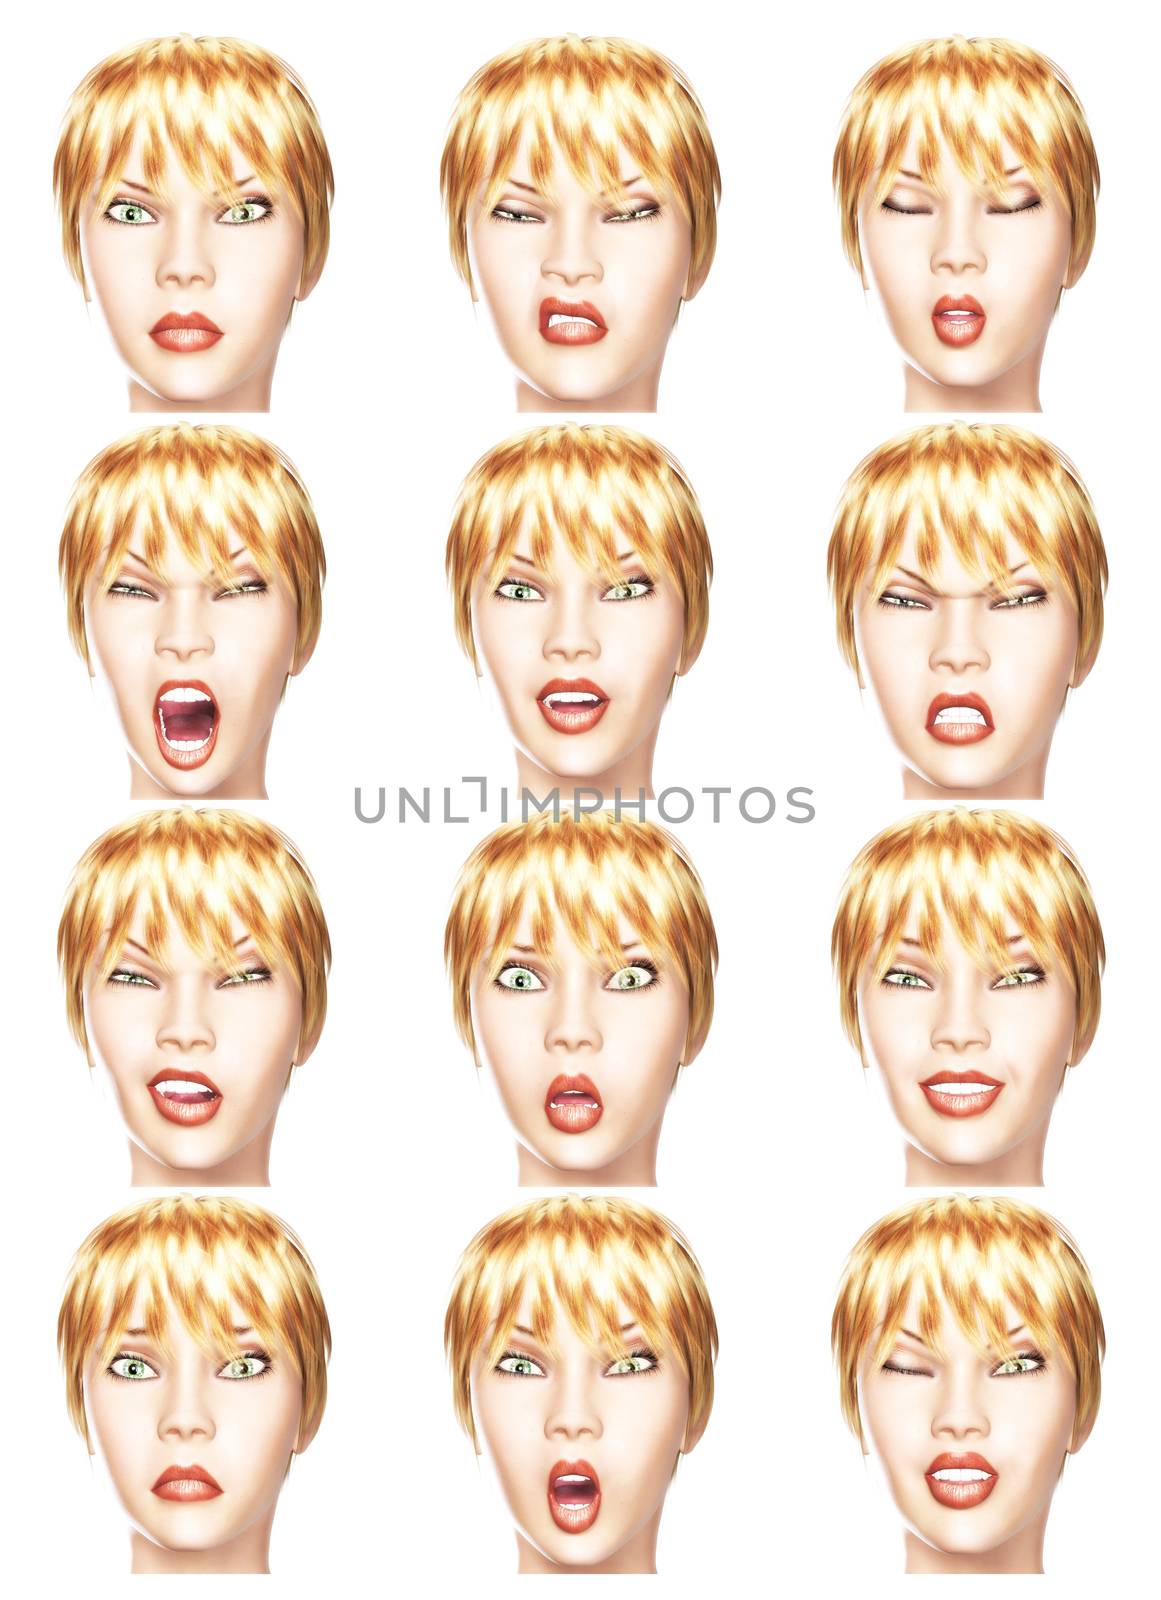 Digital Illustration of facial Expressions